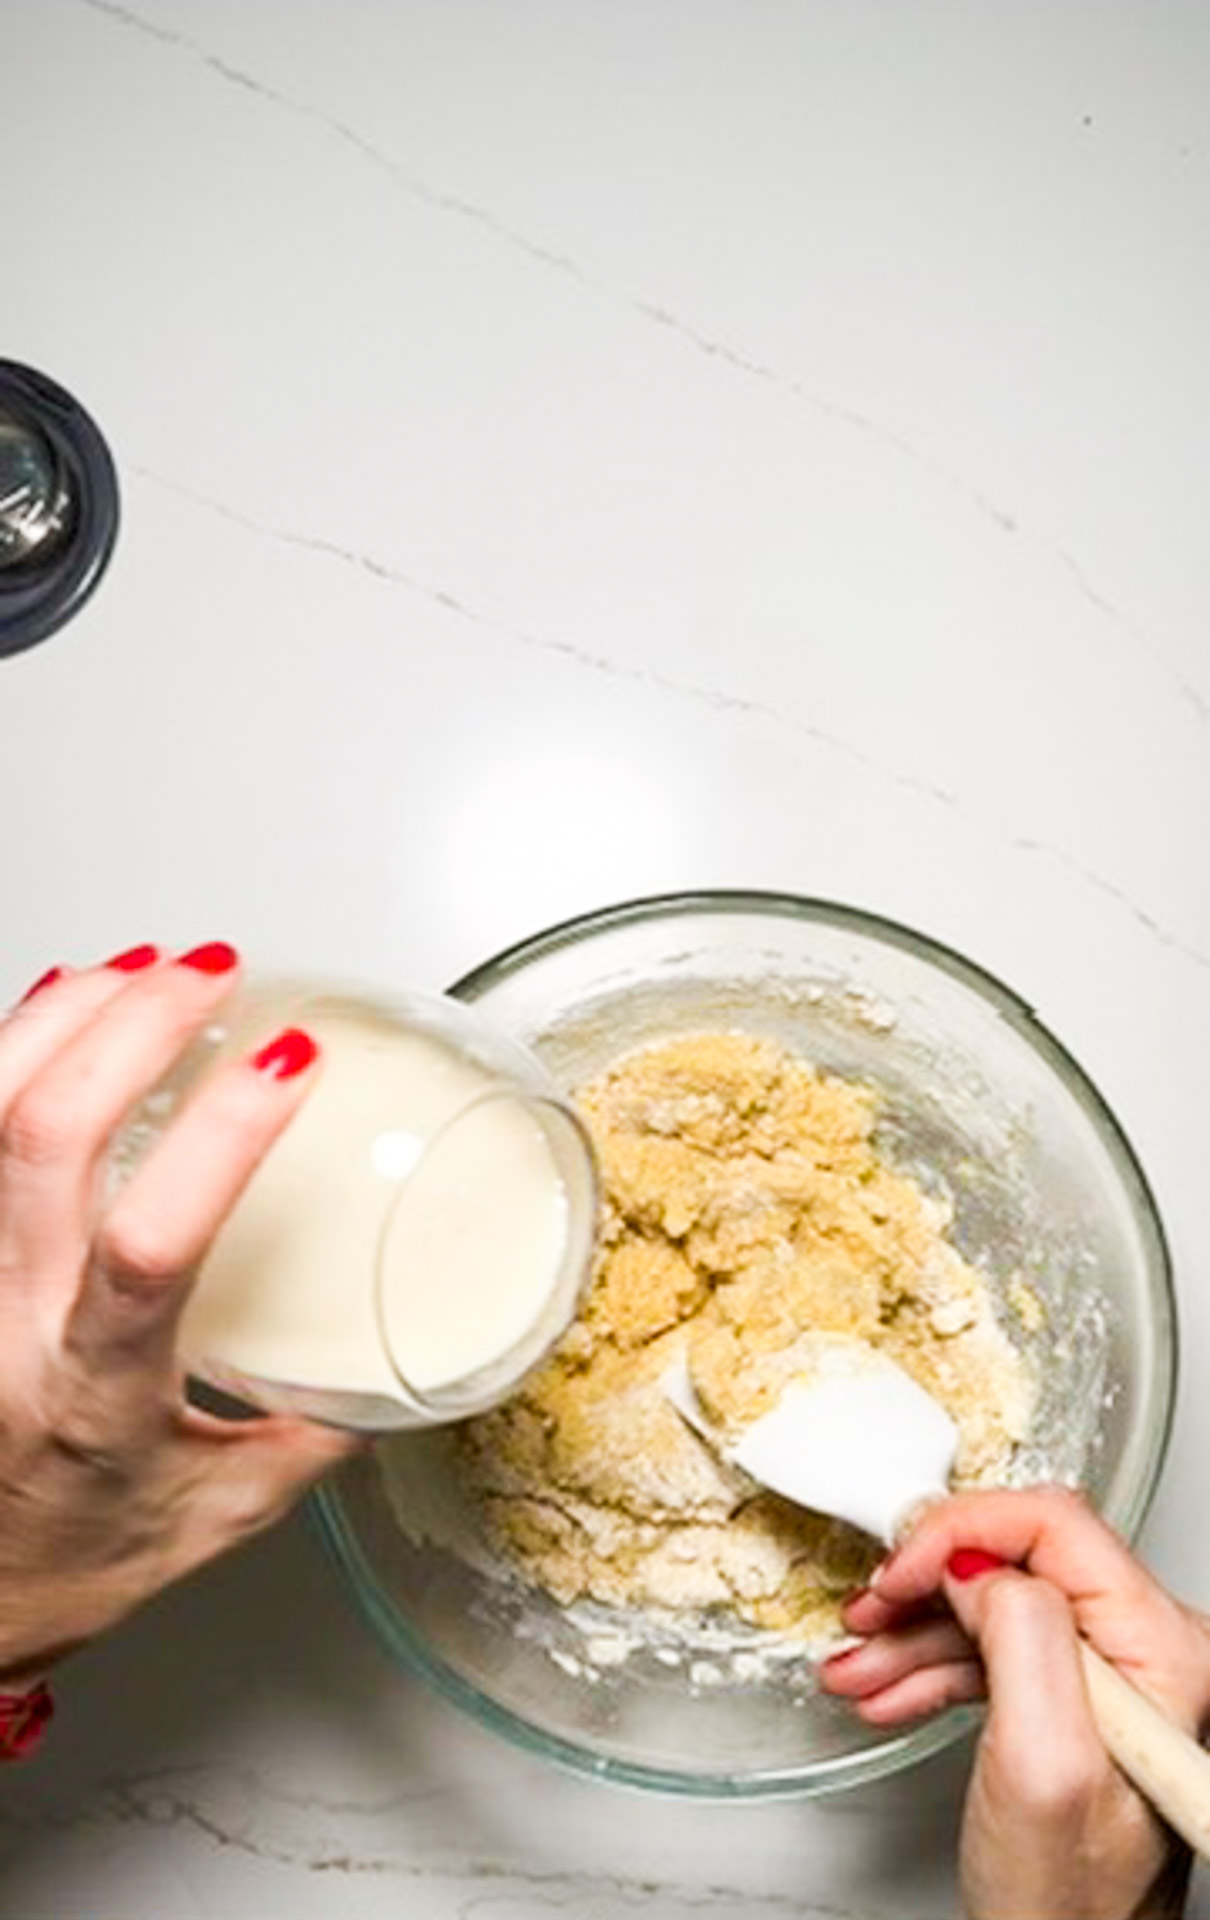 A vegan woman pouring milk into a bowl of dough for a cornbread recipe.